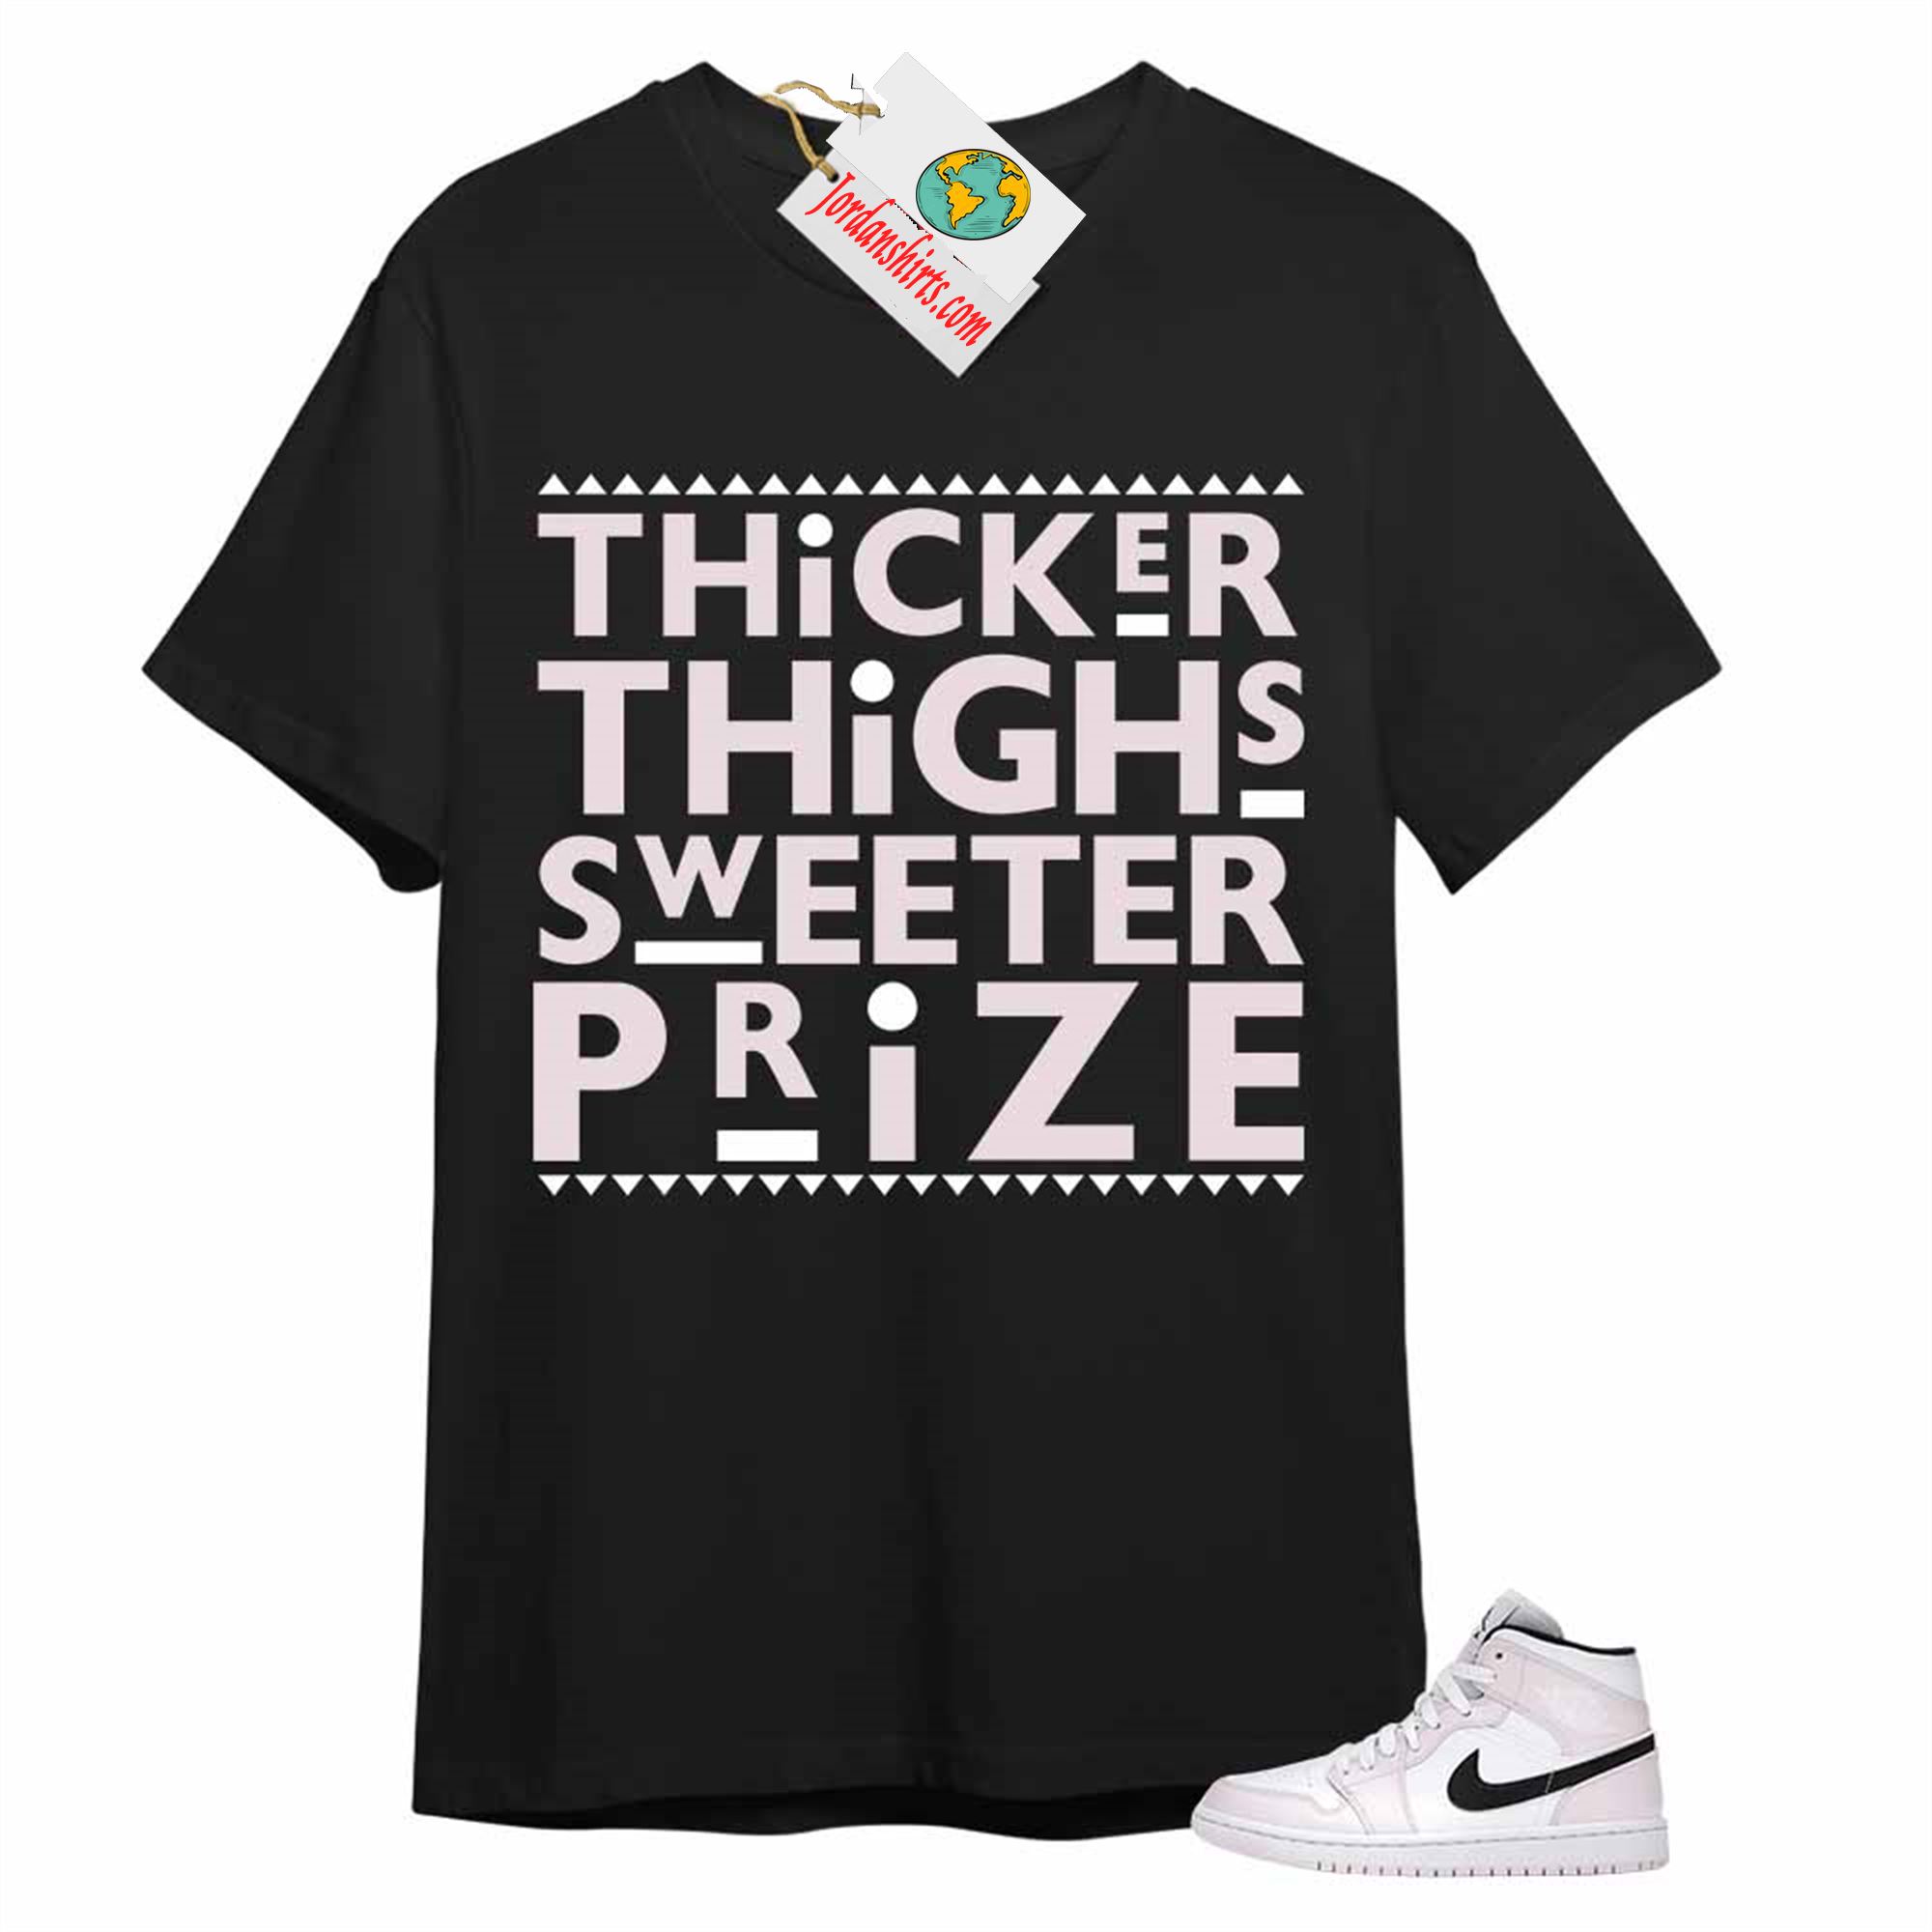 Jordan 1 Shirt, Thicker Thighs Sweeter Prize Black T-shirt Air Jordan 1 Barely Rose 1s Full Size Up To 5xl